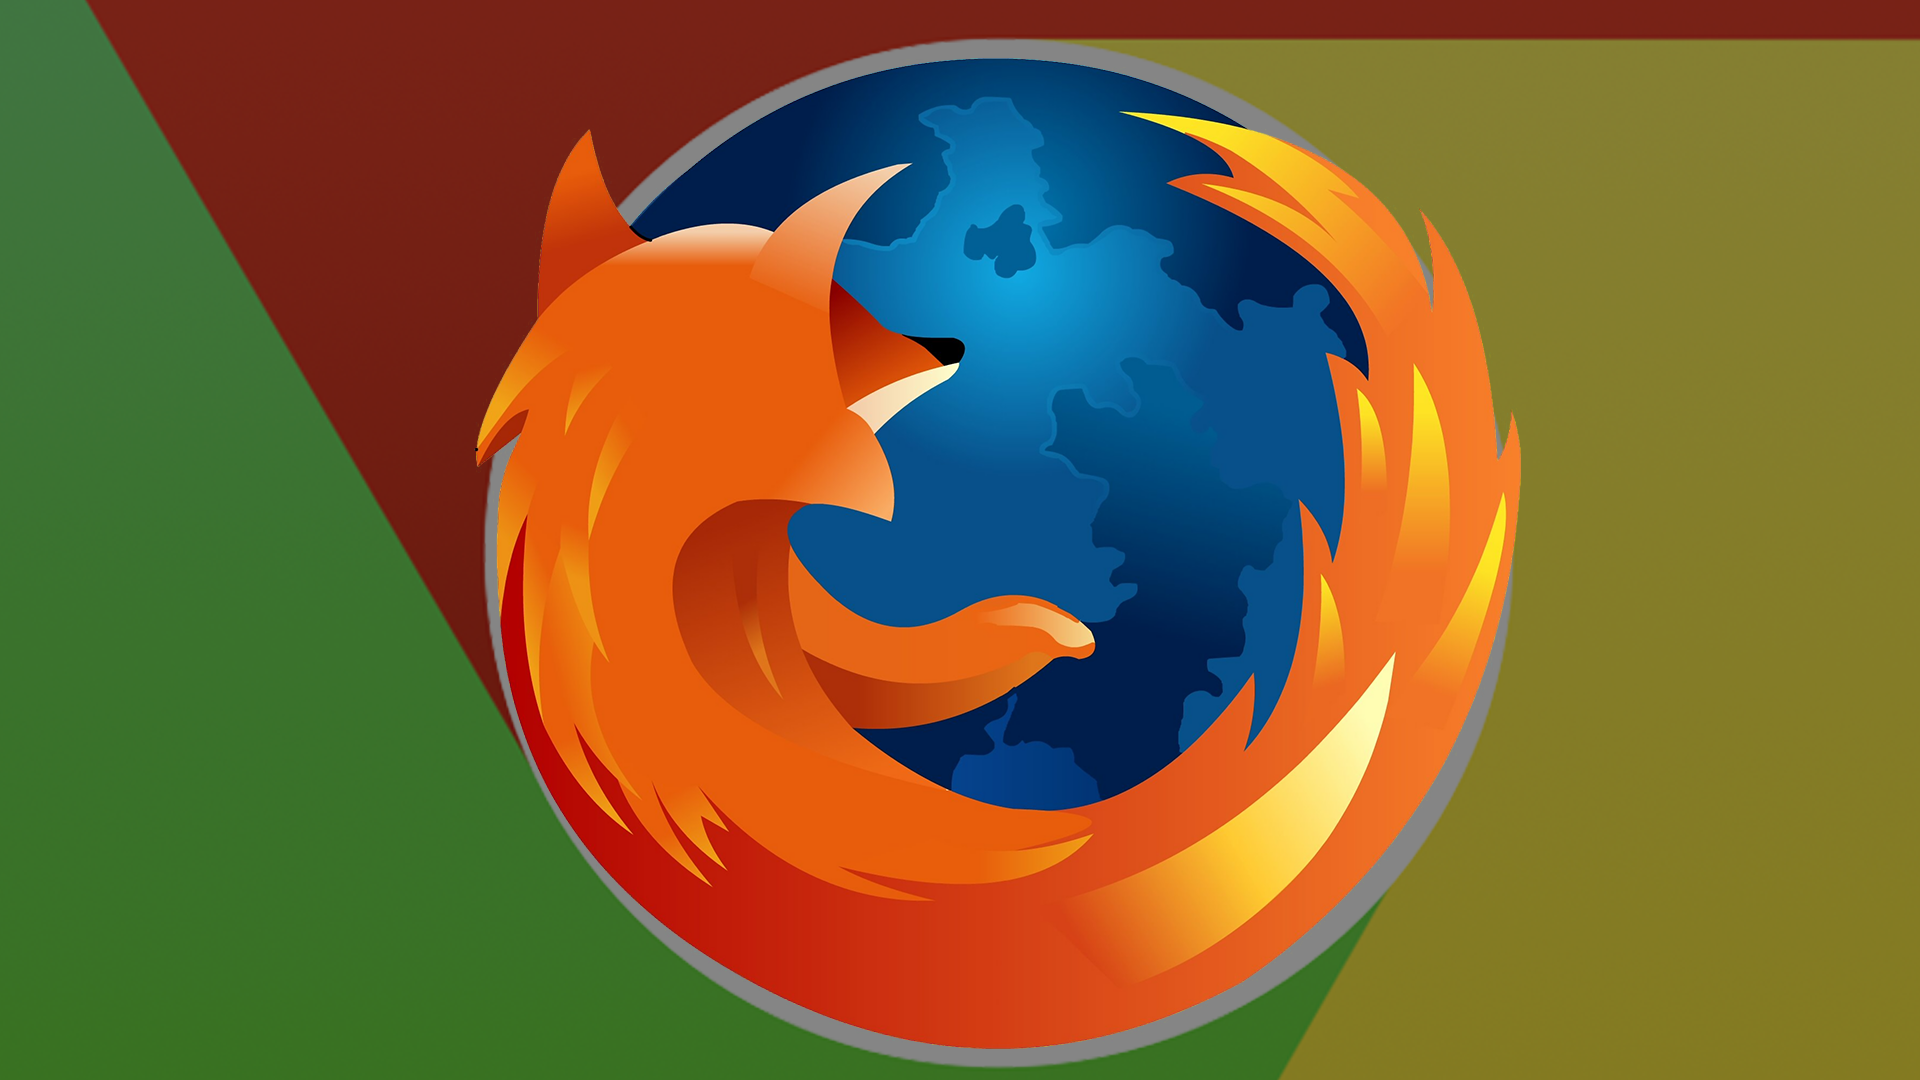 Planet Mozilla